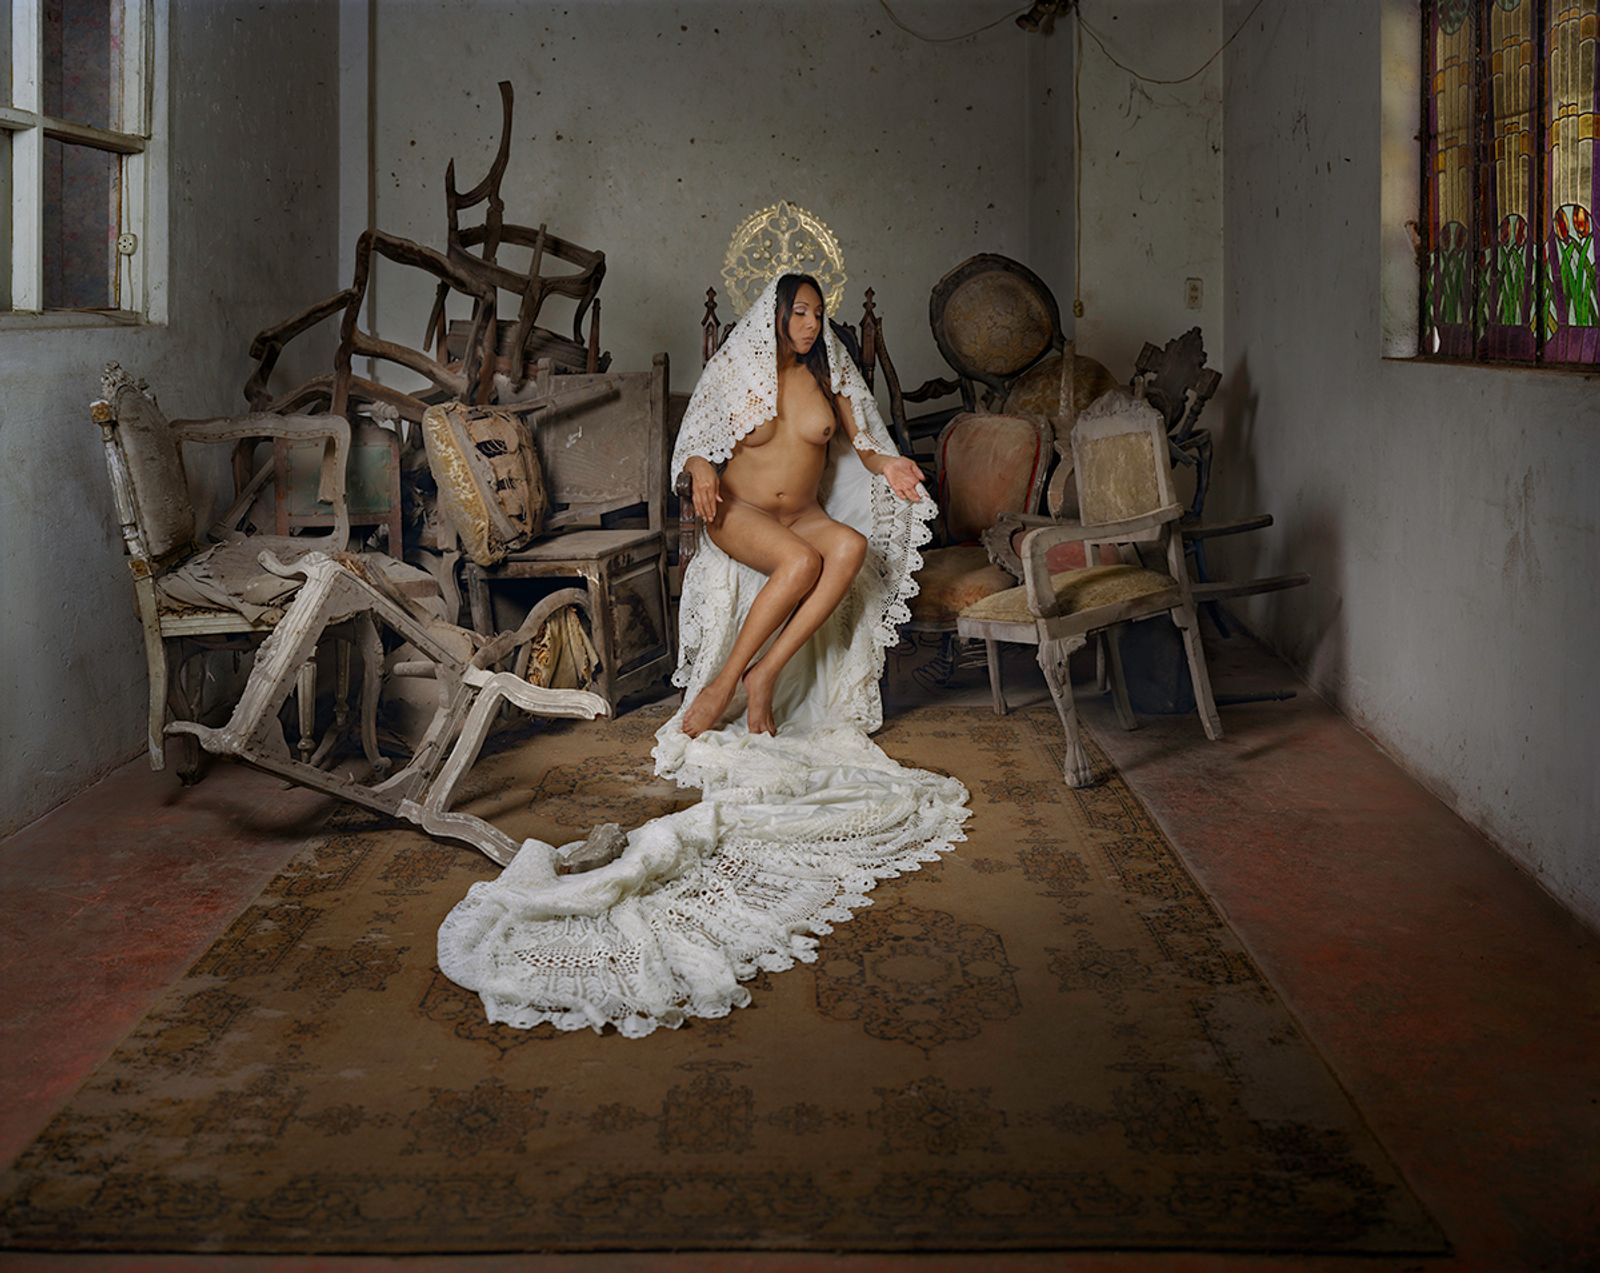 © Juan Jose Barboza-Gubo and Andrew Mroczek - Image from the Virgenes de la puerta photography project